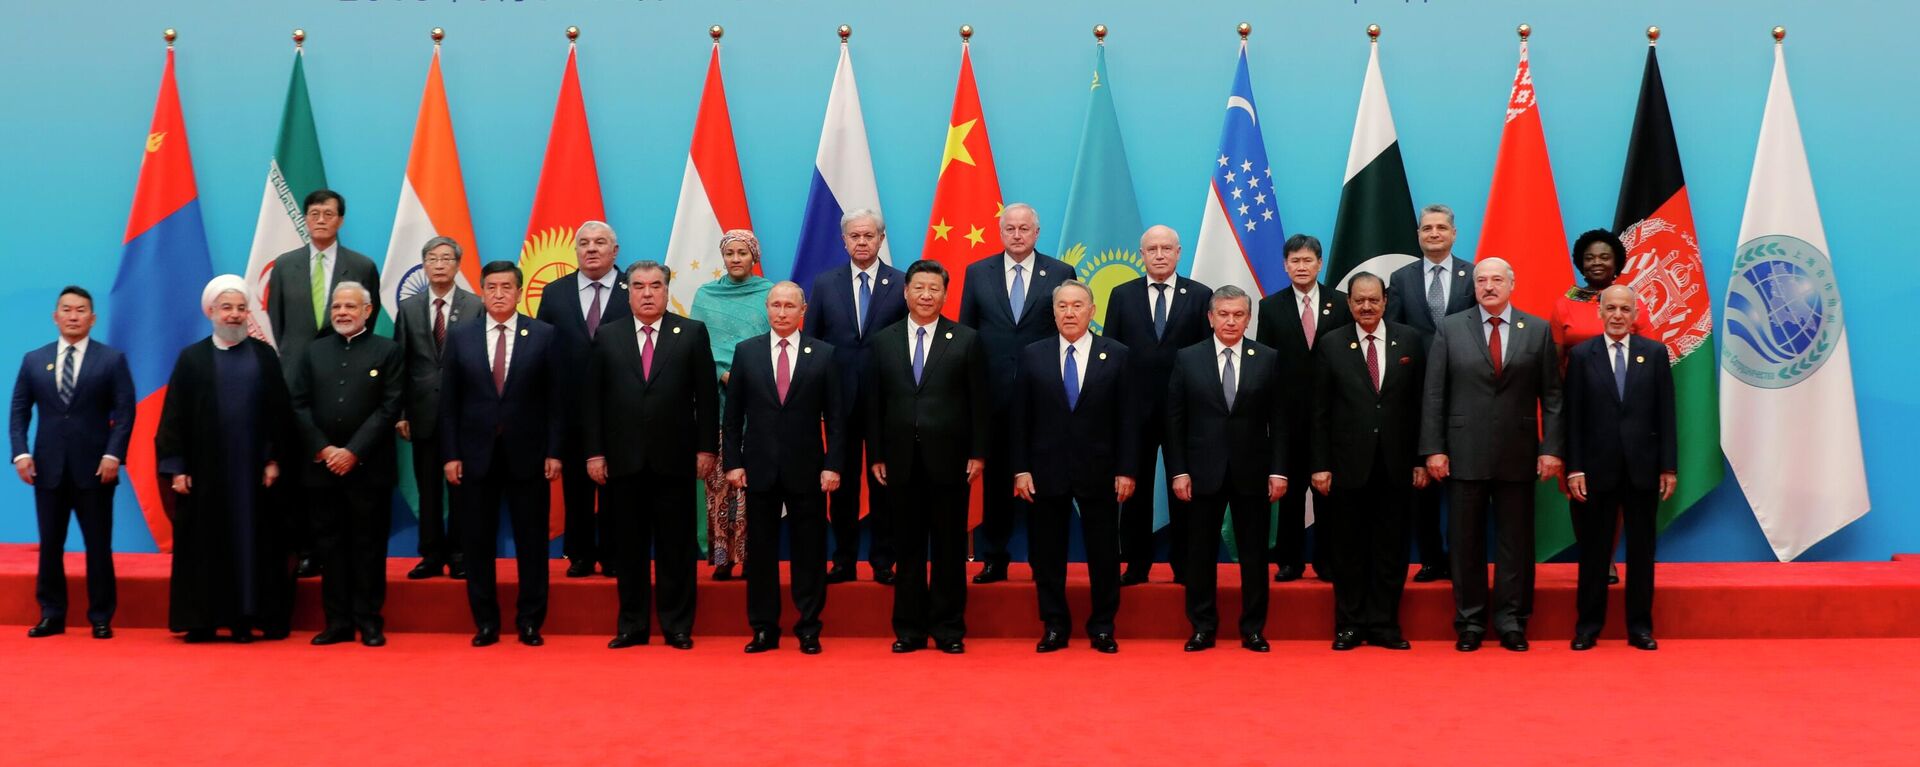 The Shanghai Cooperation Organization (SCO) summit in 2018 - Sputnik International, 1920, 13.09.2022